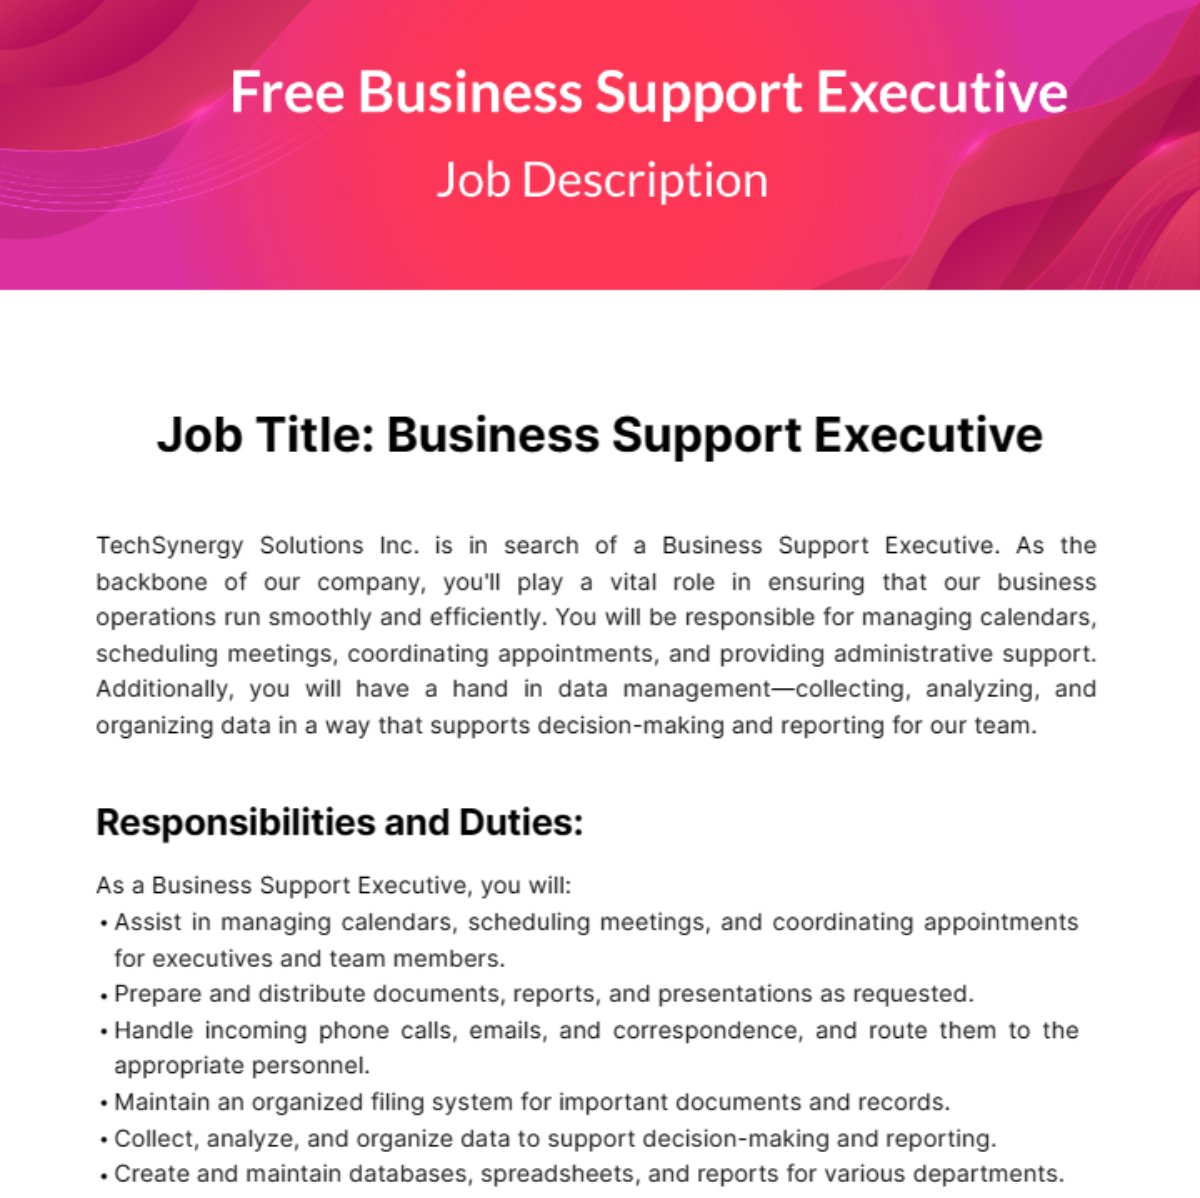 Free Business Support Executive Job Description Template